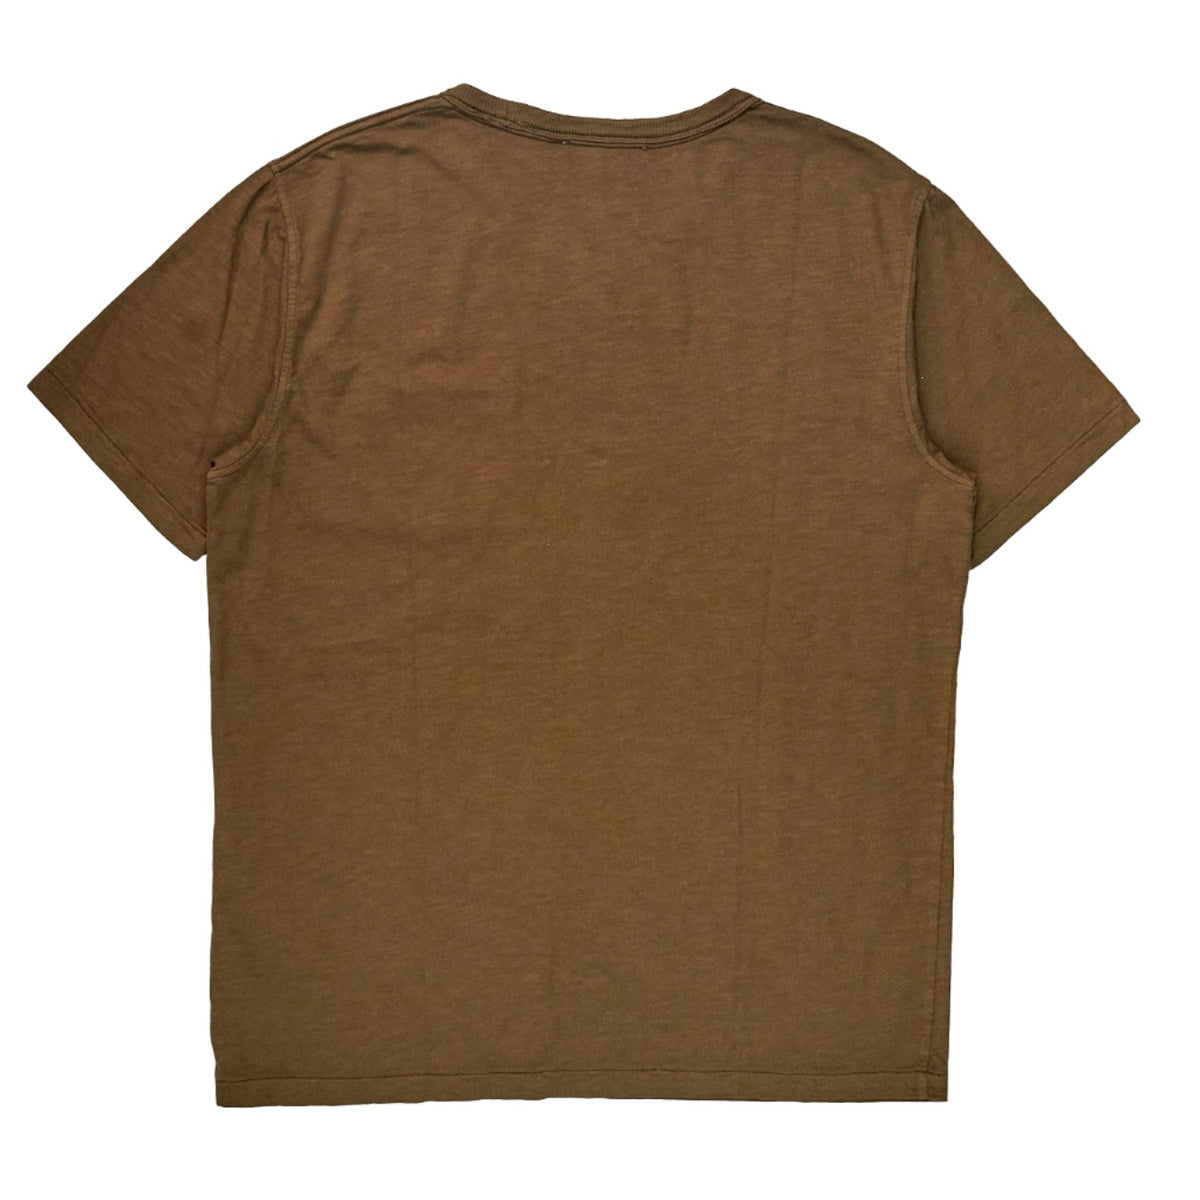 YMC Khaki Marl Pocket T-Shirt